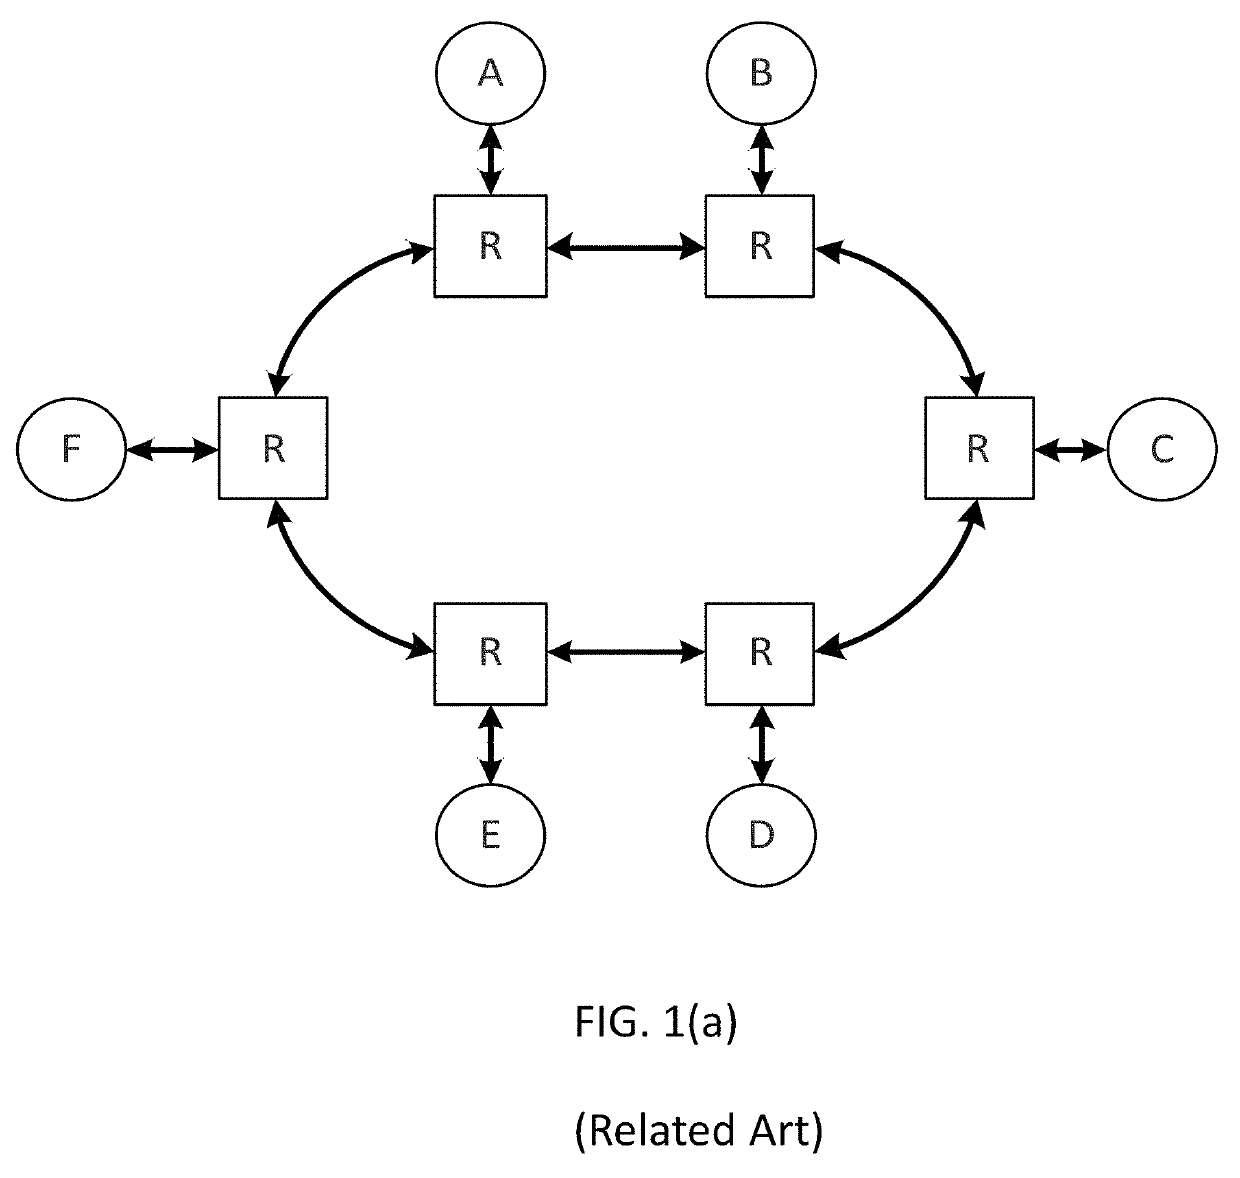 Backbone network-on-chip (NOC) for field-programmable gate array (FPGA)